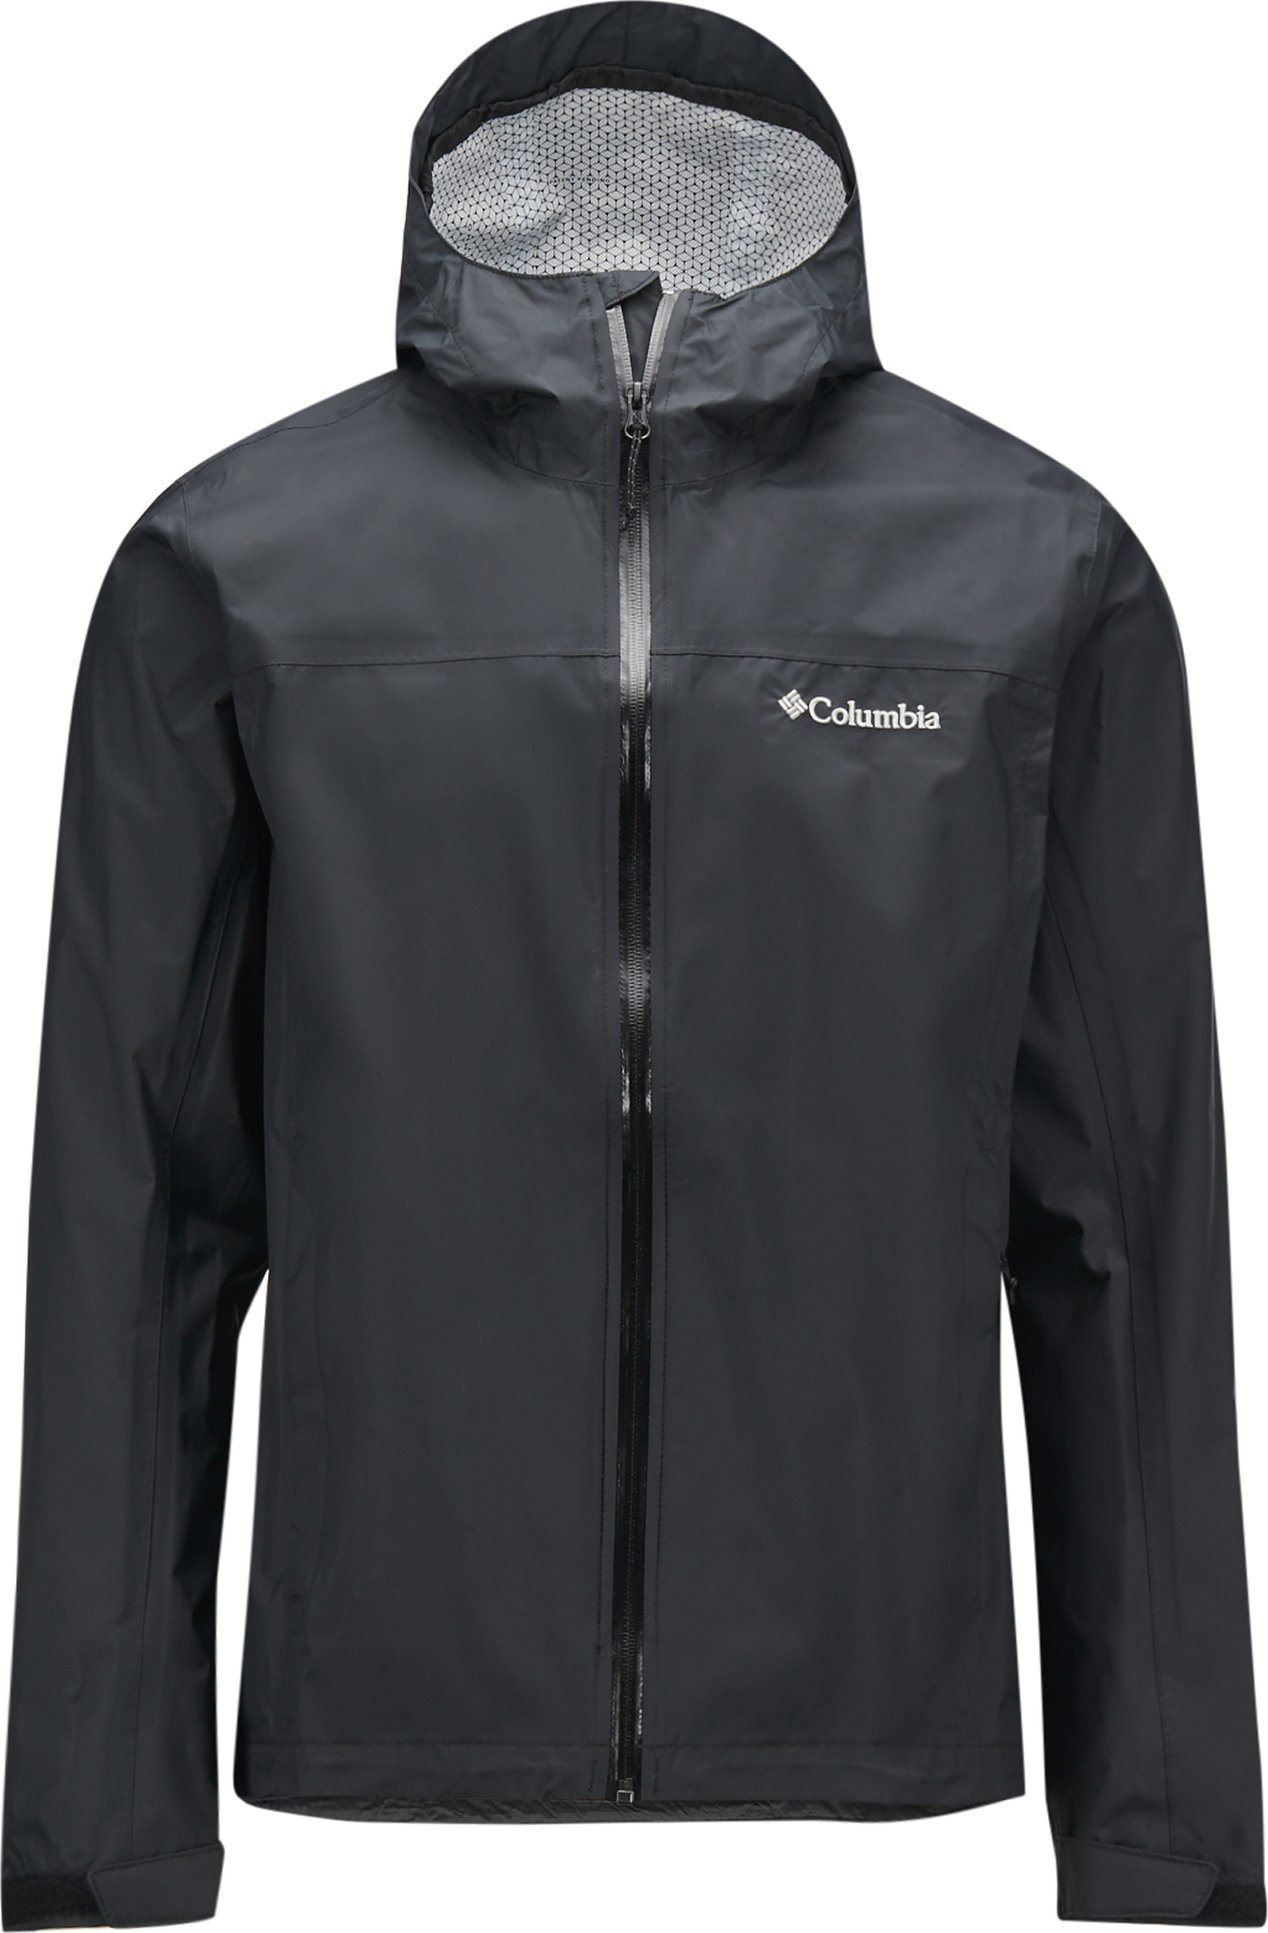 Columbia evapouration jacket